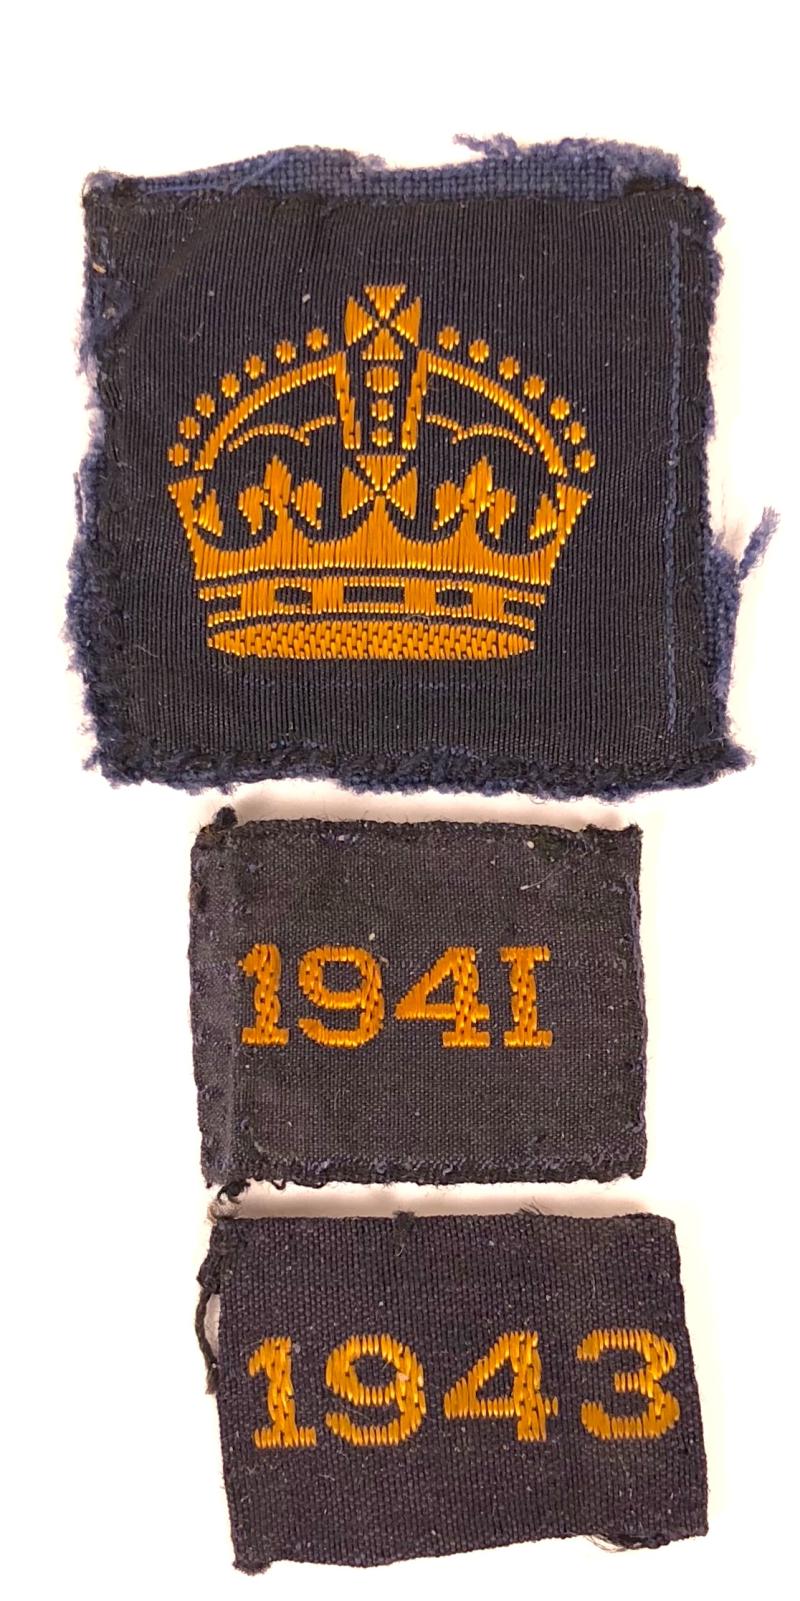 WW2 Girl Guides war service badges 1939 -1945